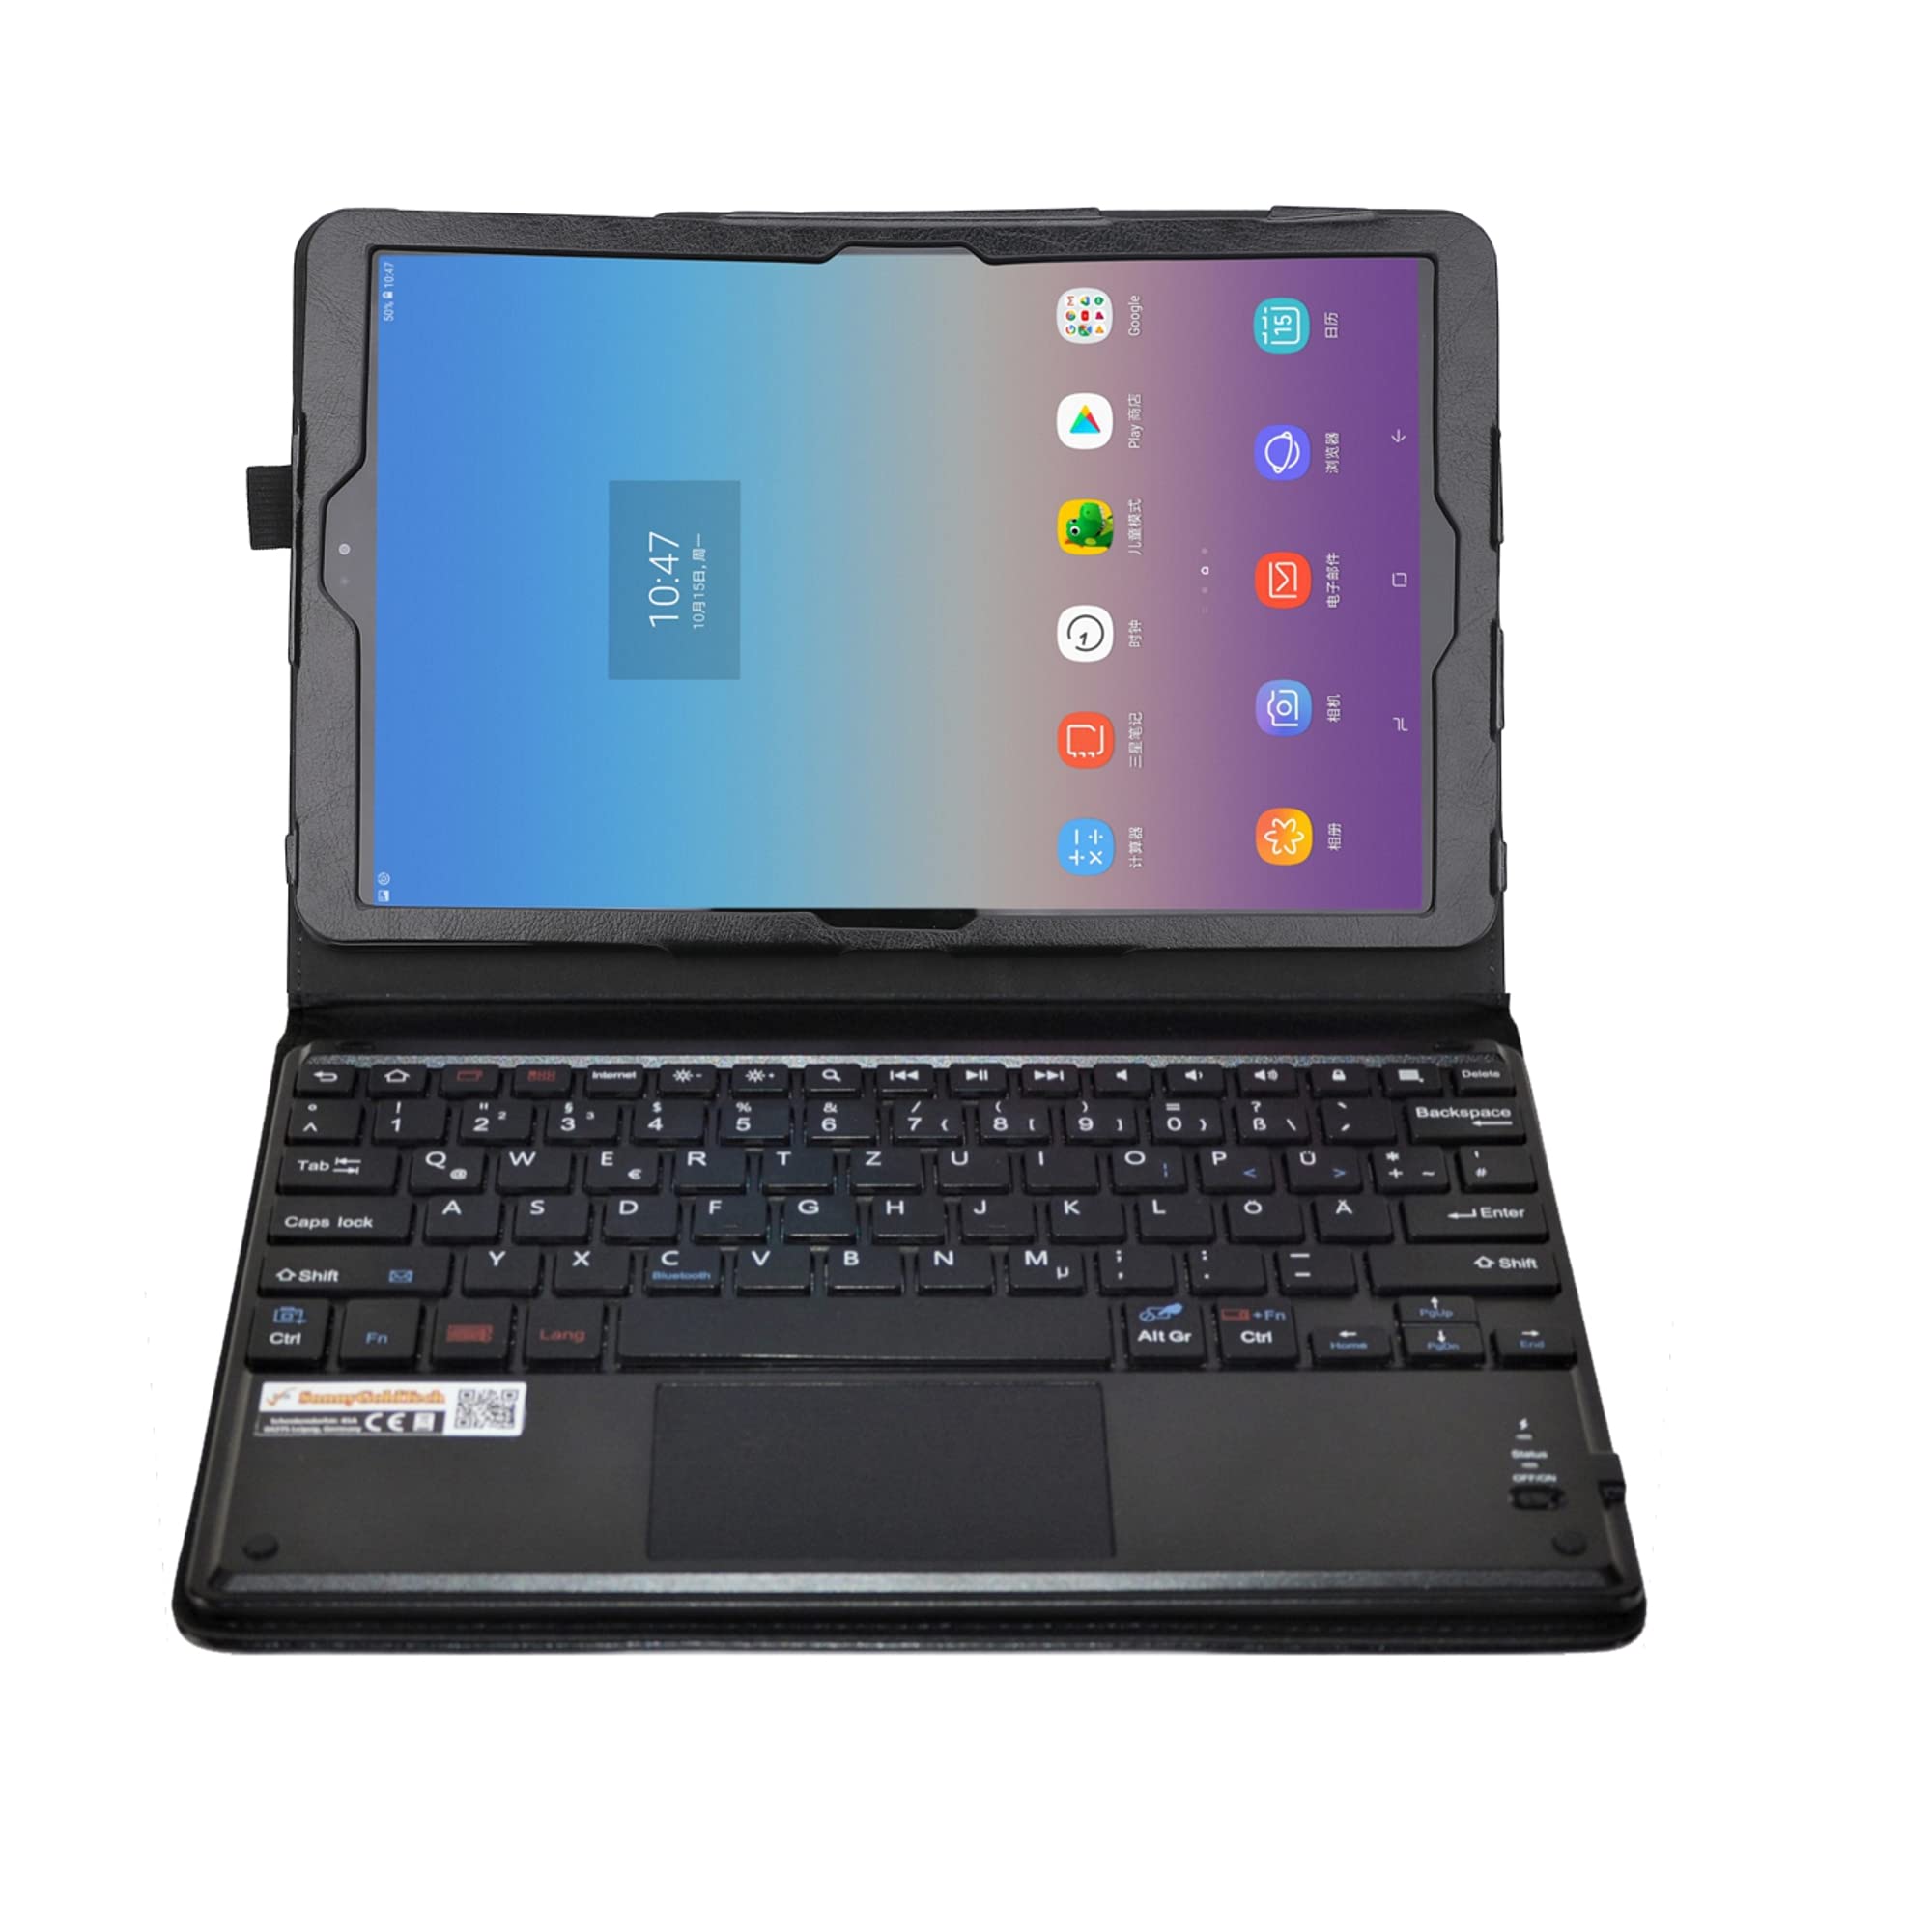 MQ für Galaxy Tab A 10.5 - Bluetooth Tastatur Tasche mit Touchpad für Samsung Galaxy Tab A 10.5 | Tastatur Hülle für Galaxy Tab A 10.5 LTE SM-T595 WiFi T590 | Touchpad Tastatur Layout QWERTZ, Schwarz